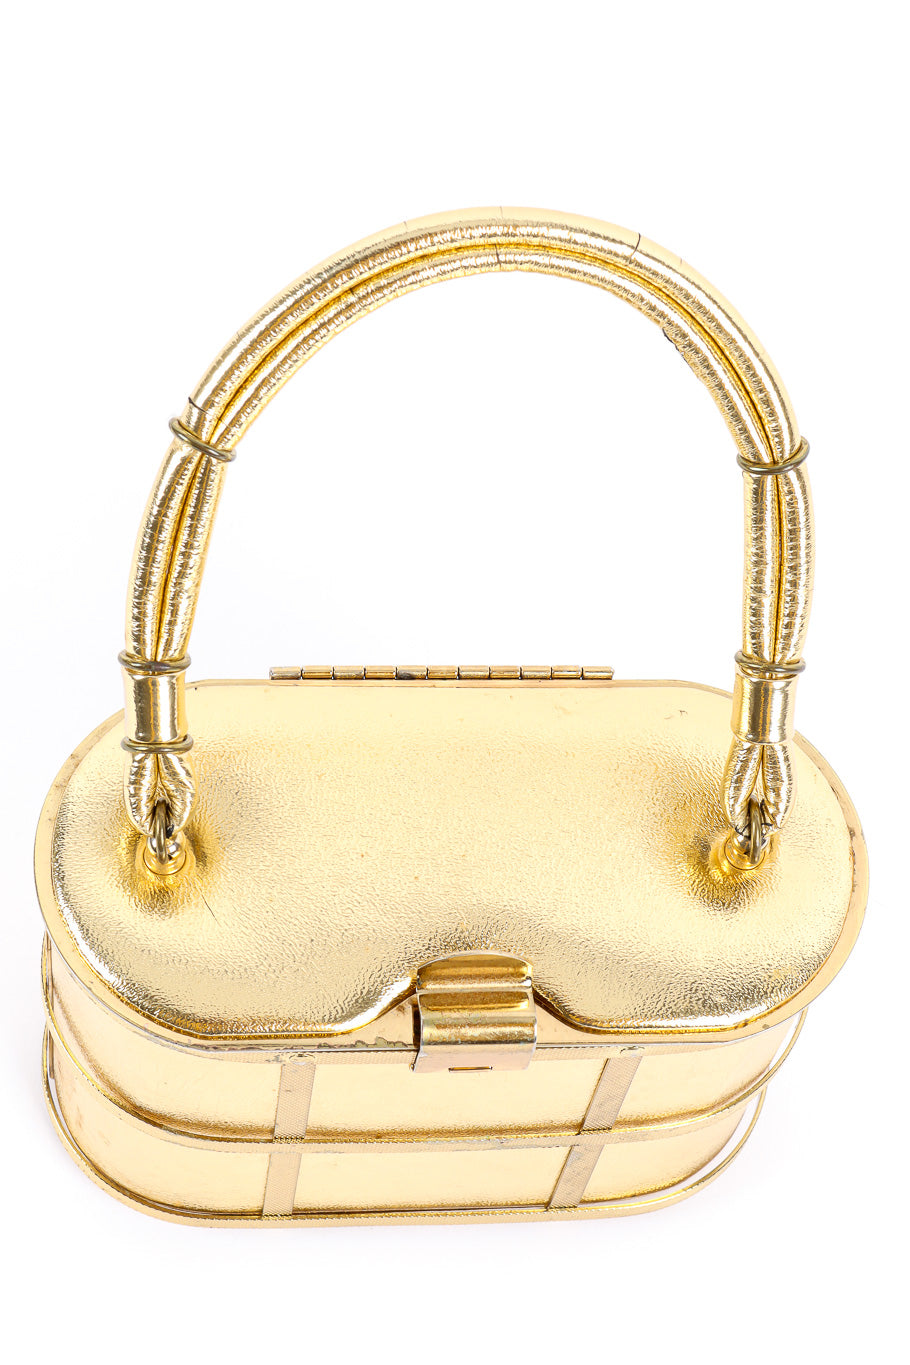 Etra metallic caged oval box bag top handle detail @recessla